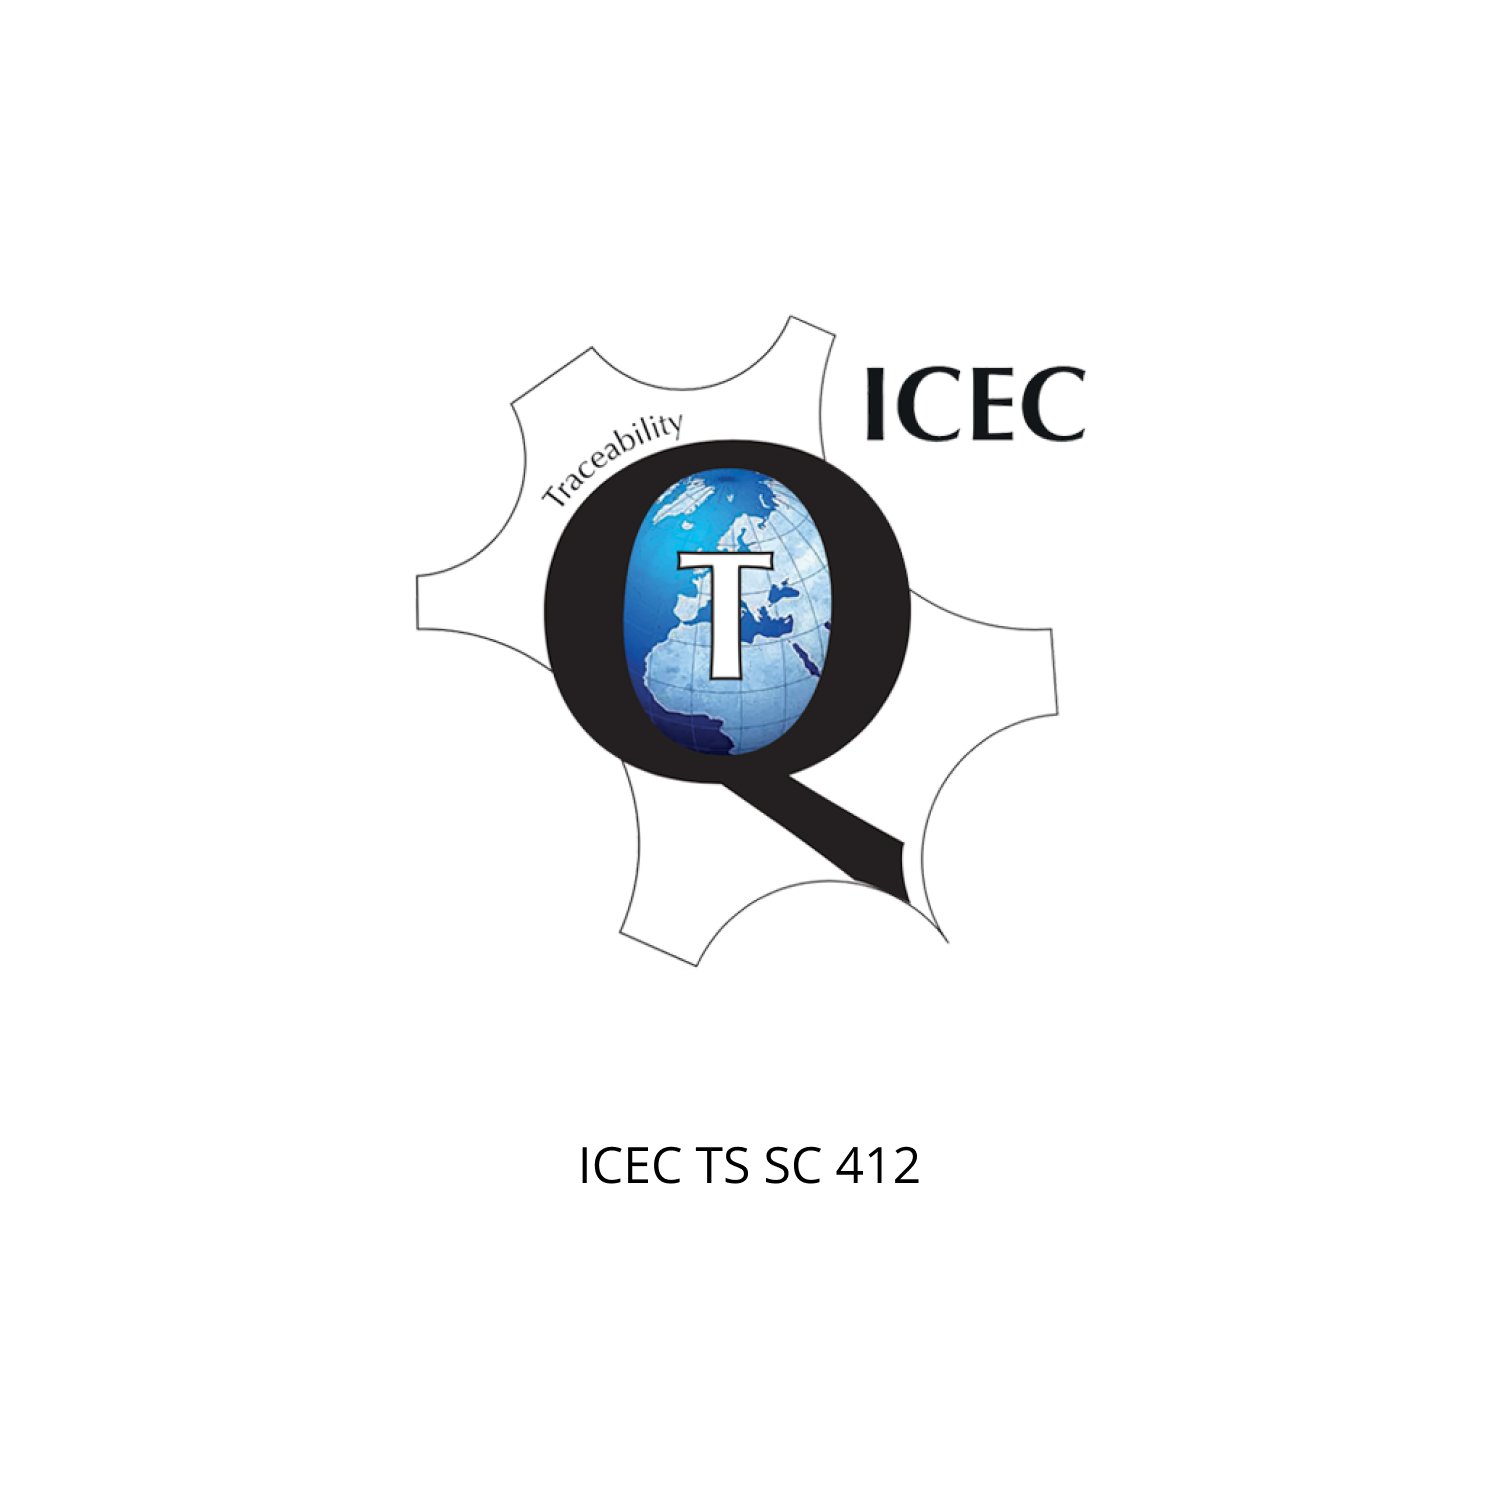 ICEC TSCS 410.jpg (Copia) (Copia) (Copia)